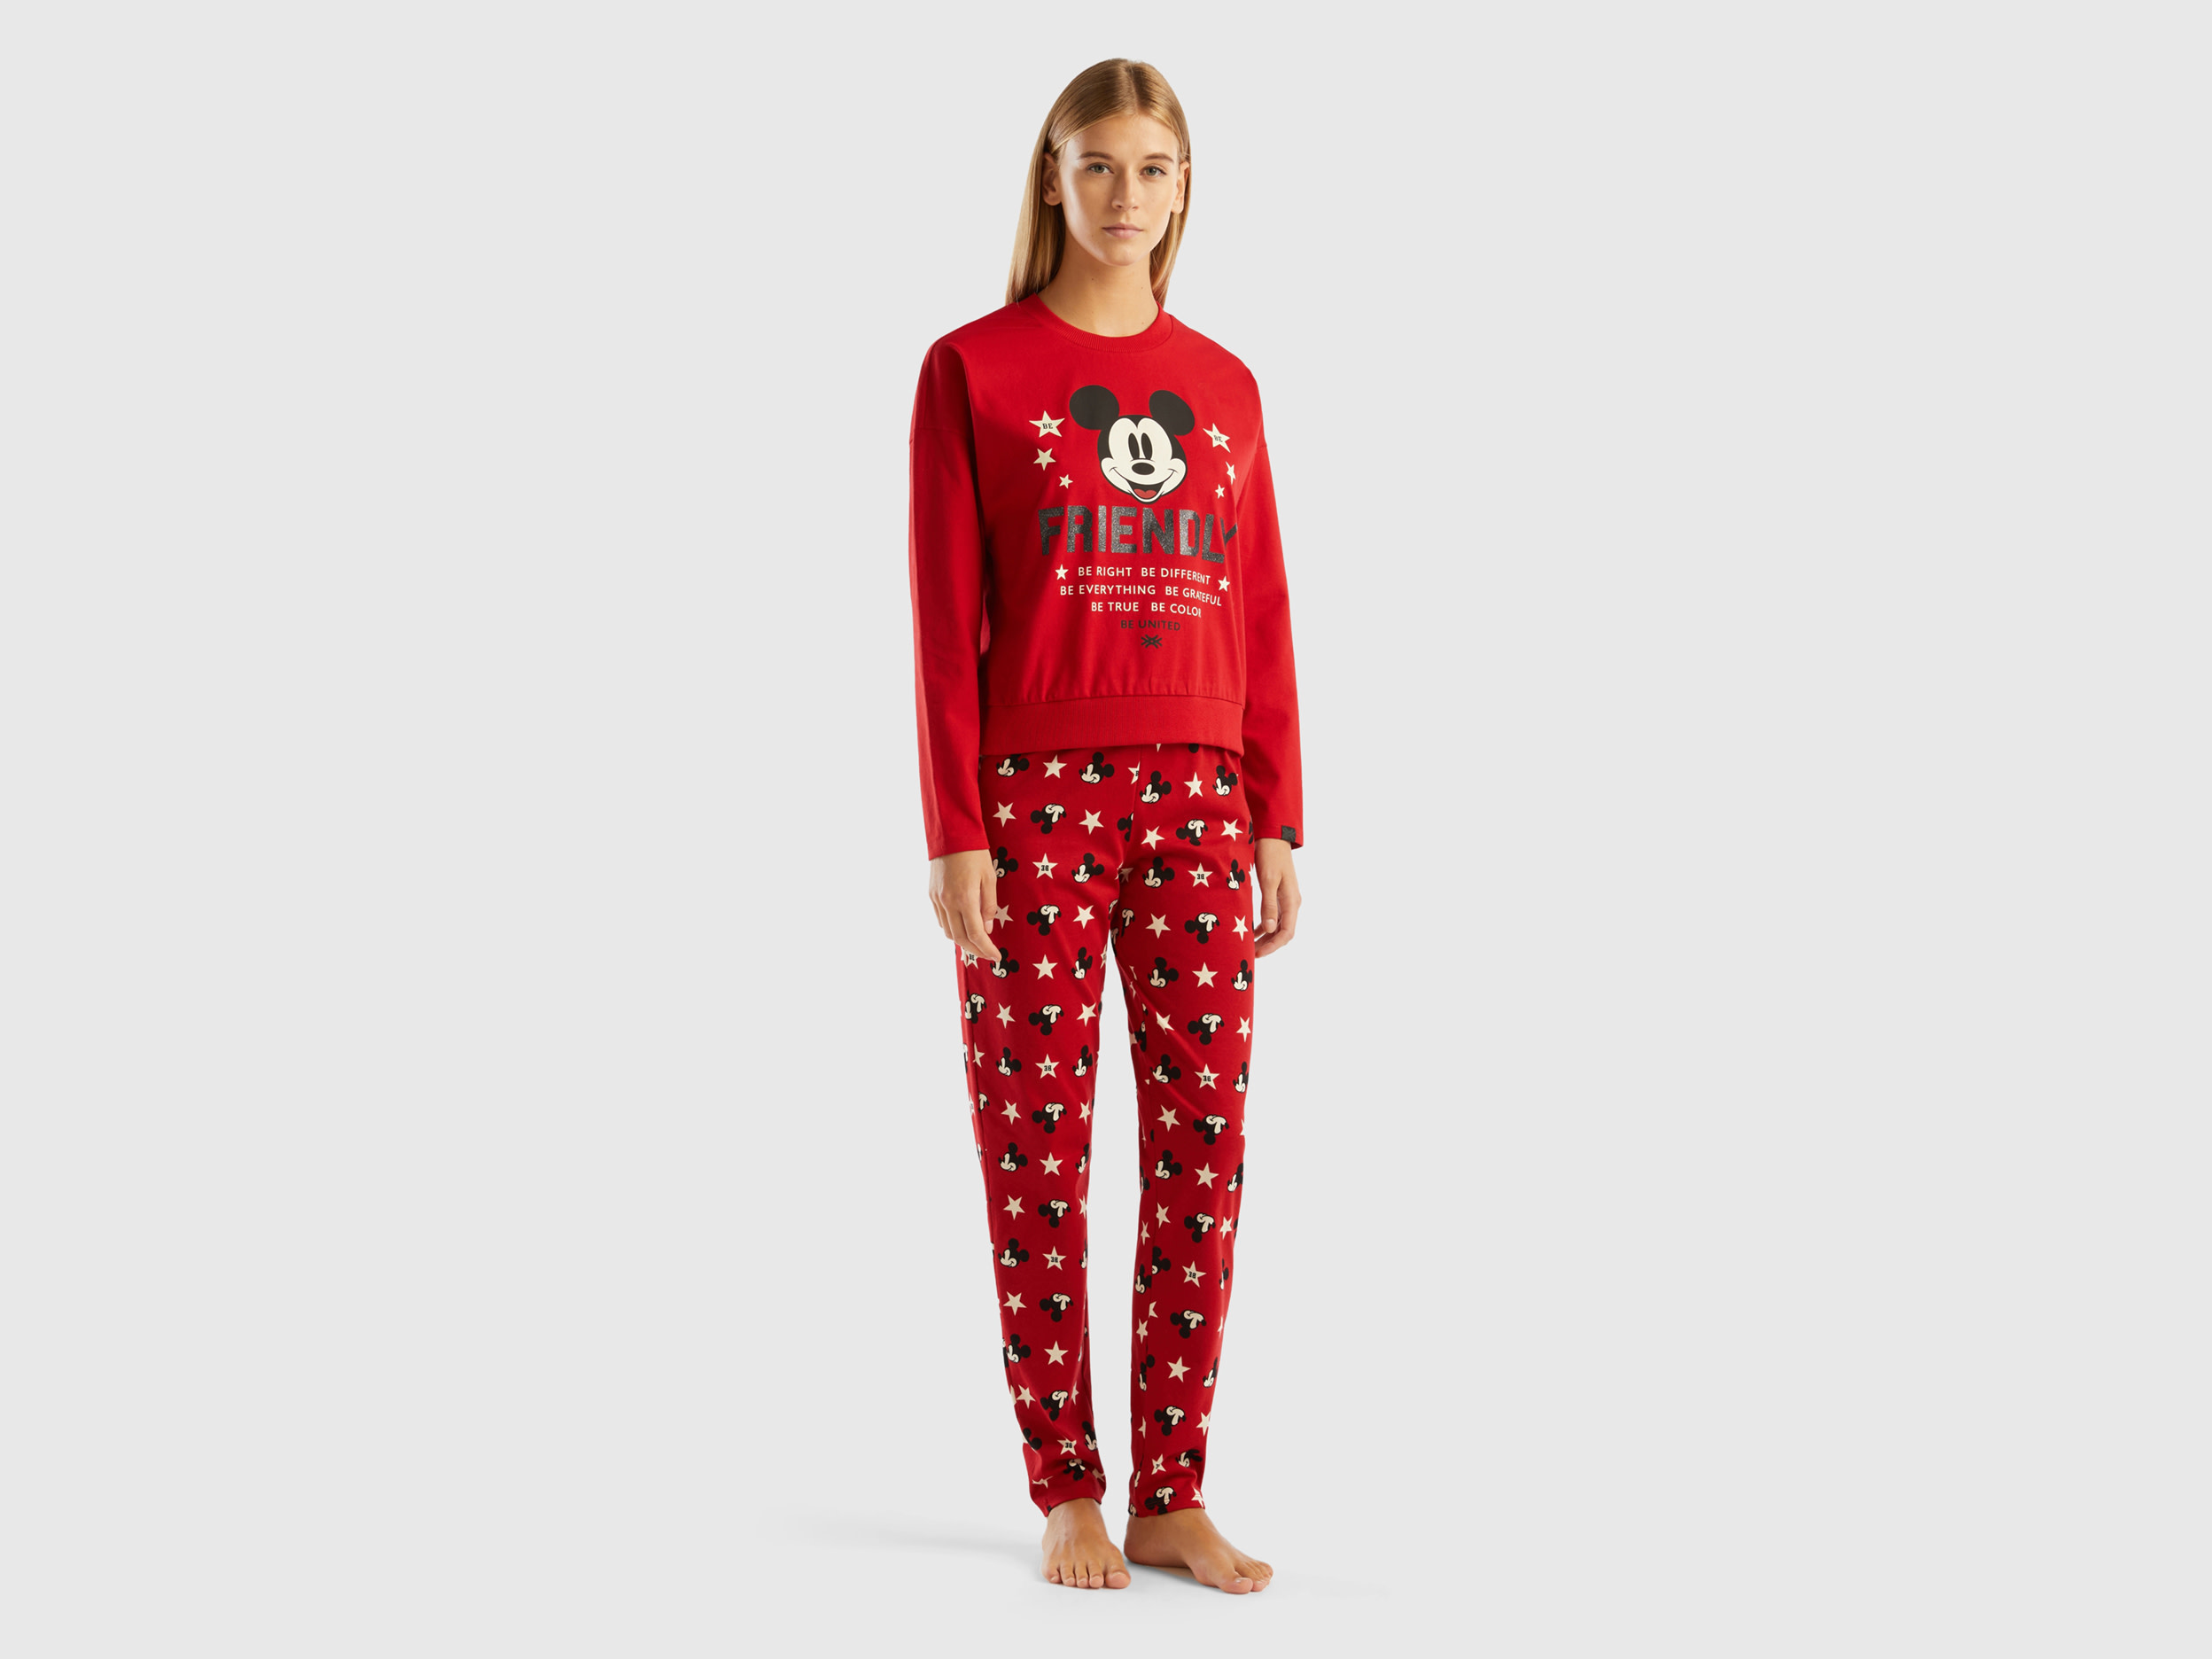 Benetton, Pyjamas With Neon Mickey Mouse Print, size XS, Red, Women